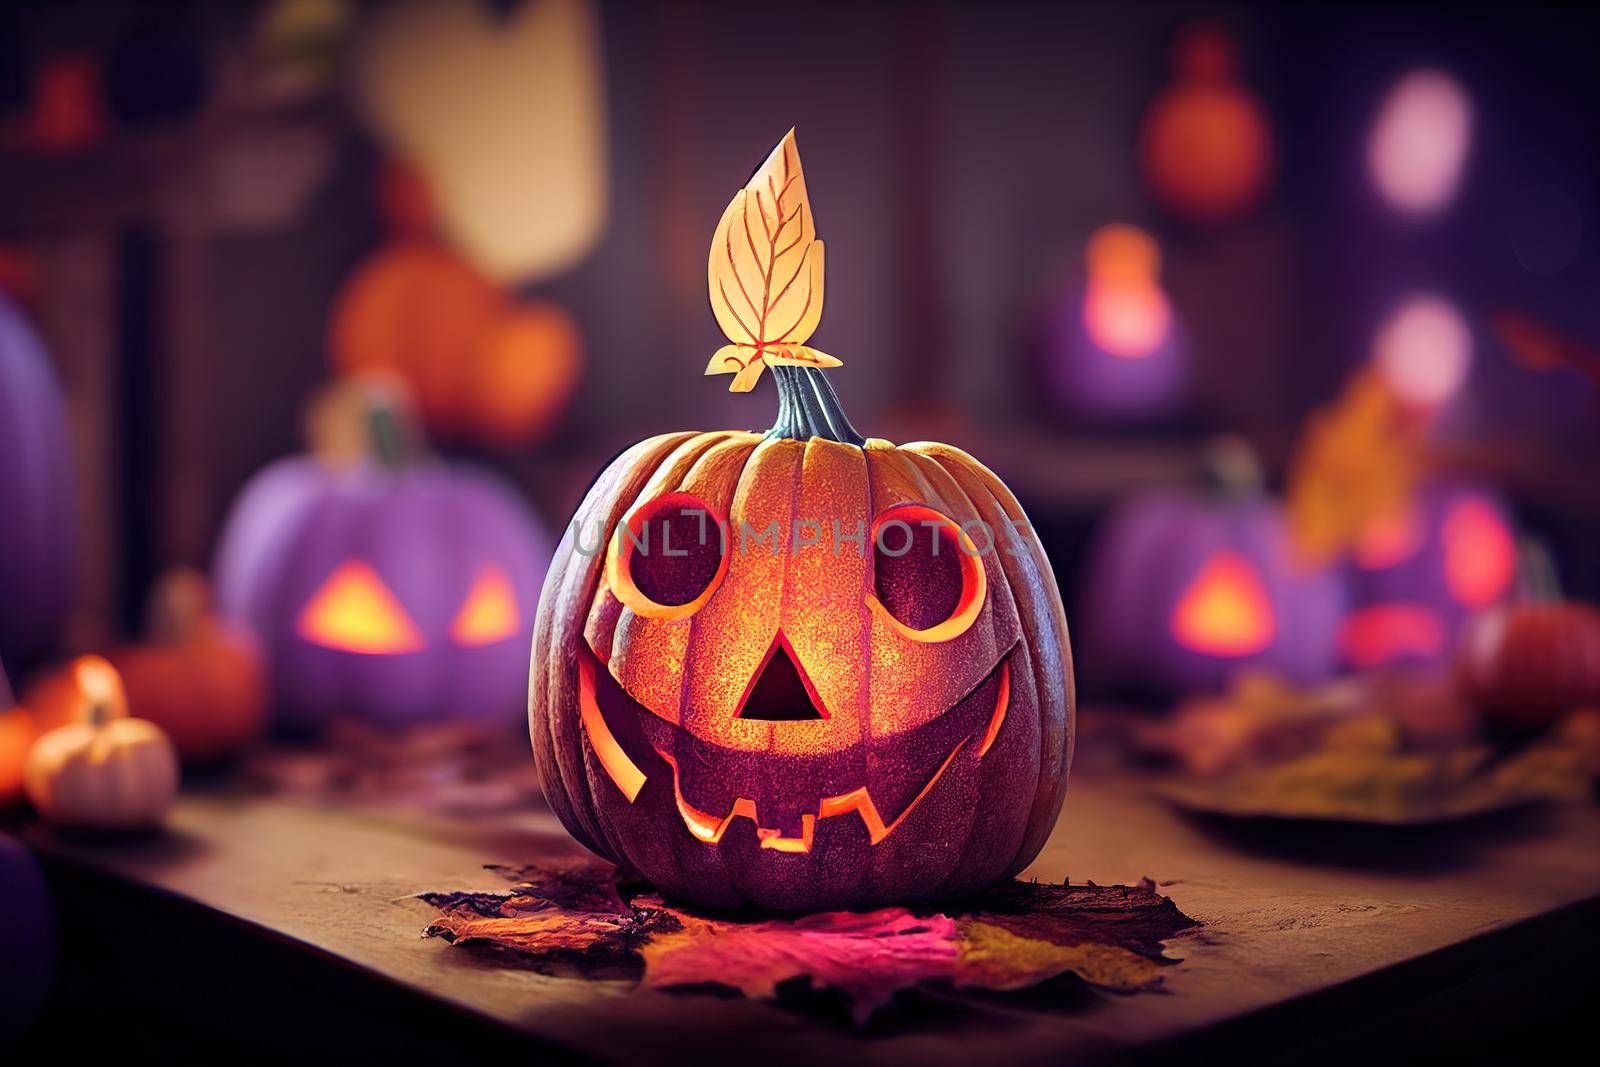 spooky smiling halloween pumpkin. High quality 3d illustration